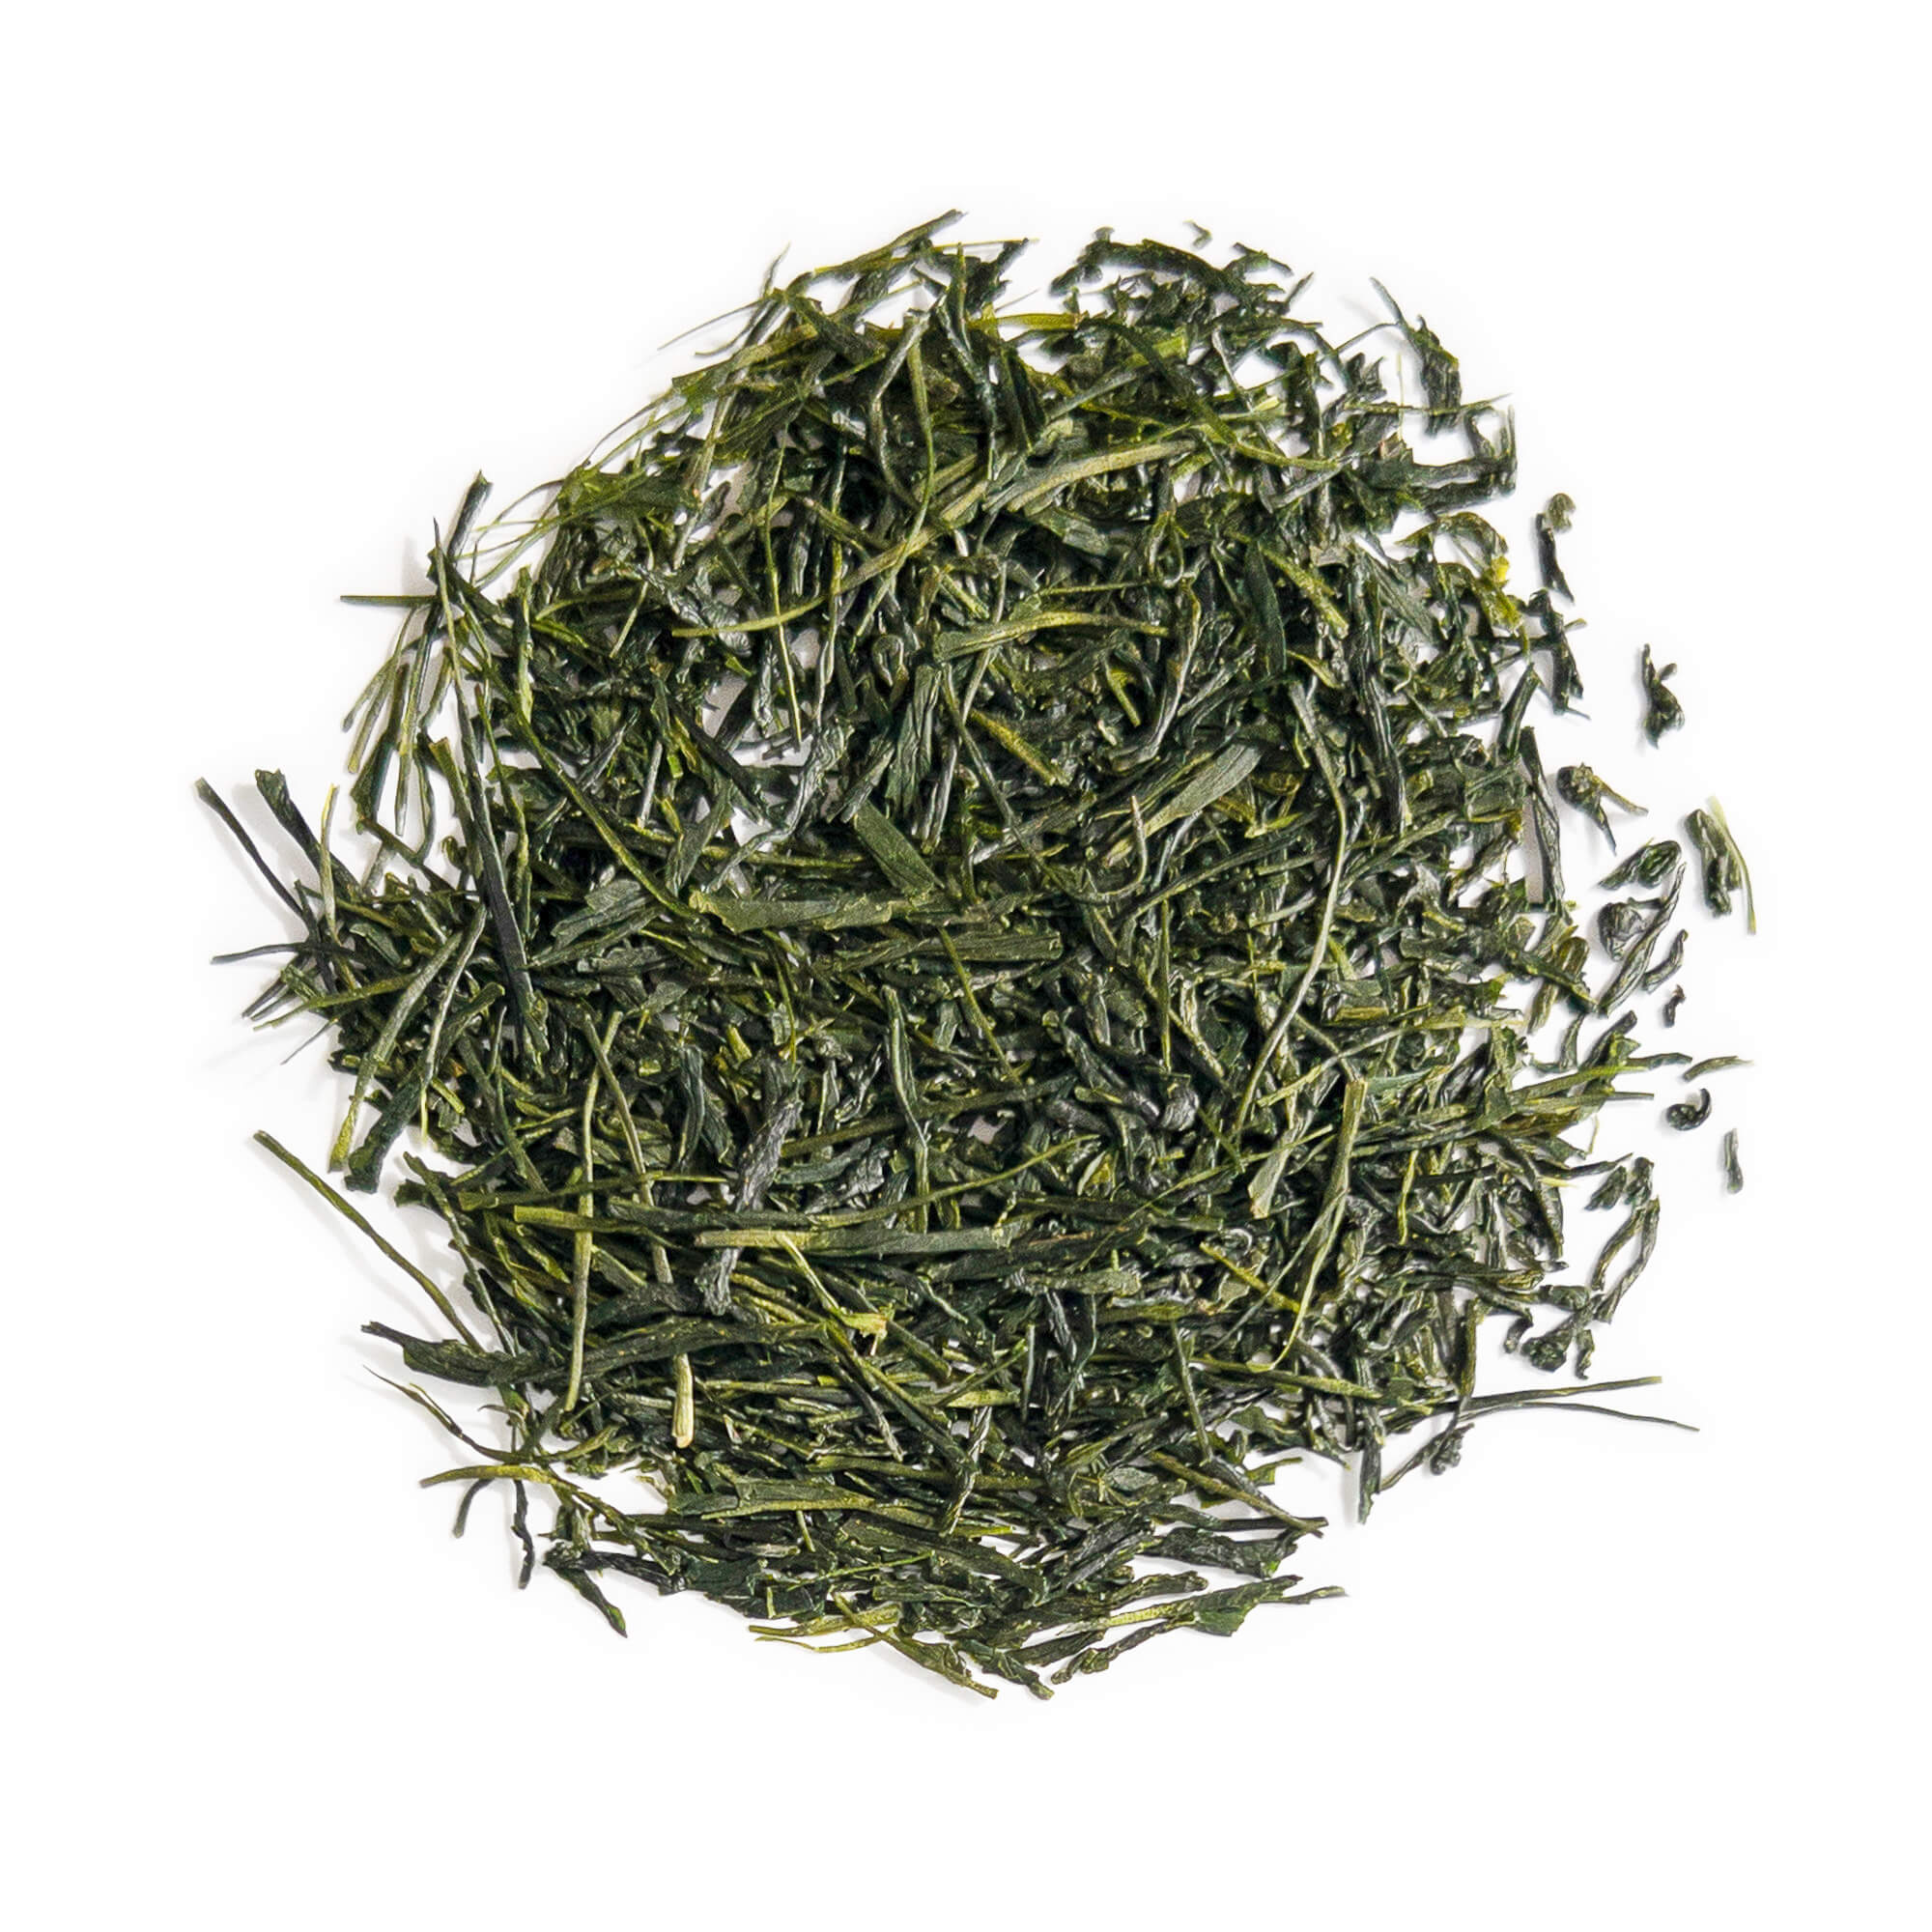 Goko Sencha - Green Tea from Uji, Japan